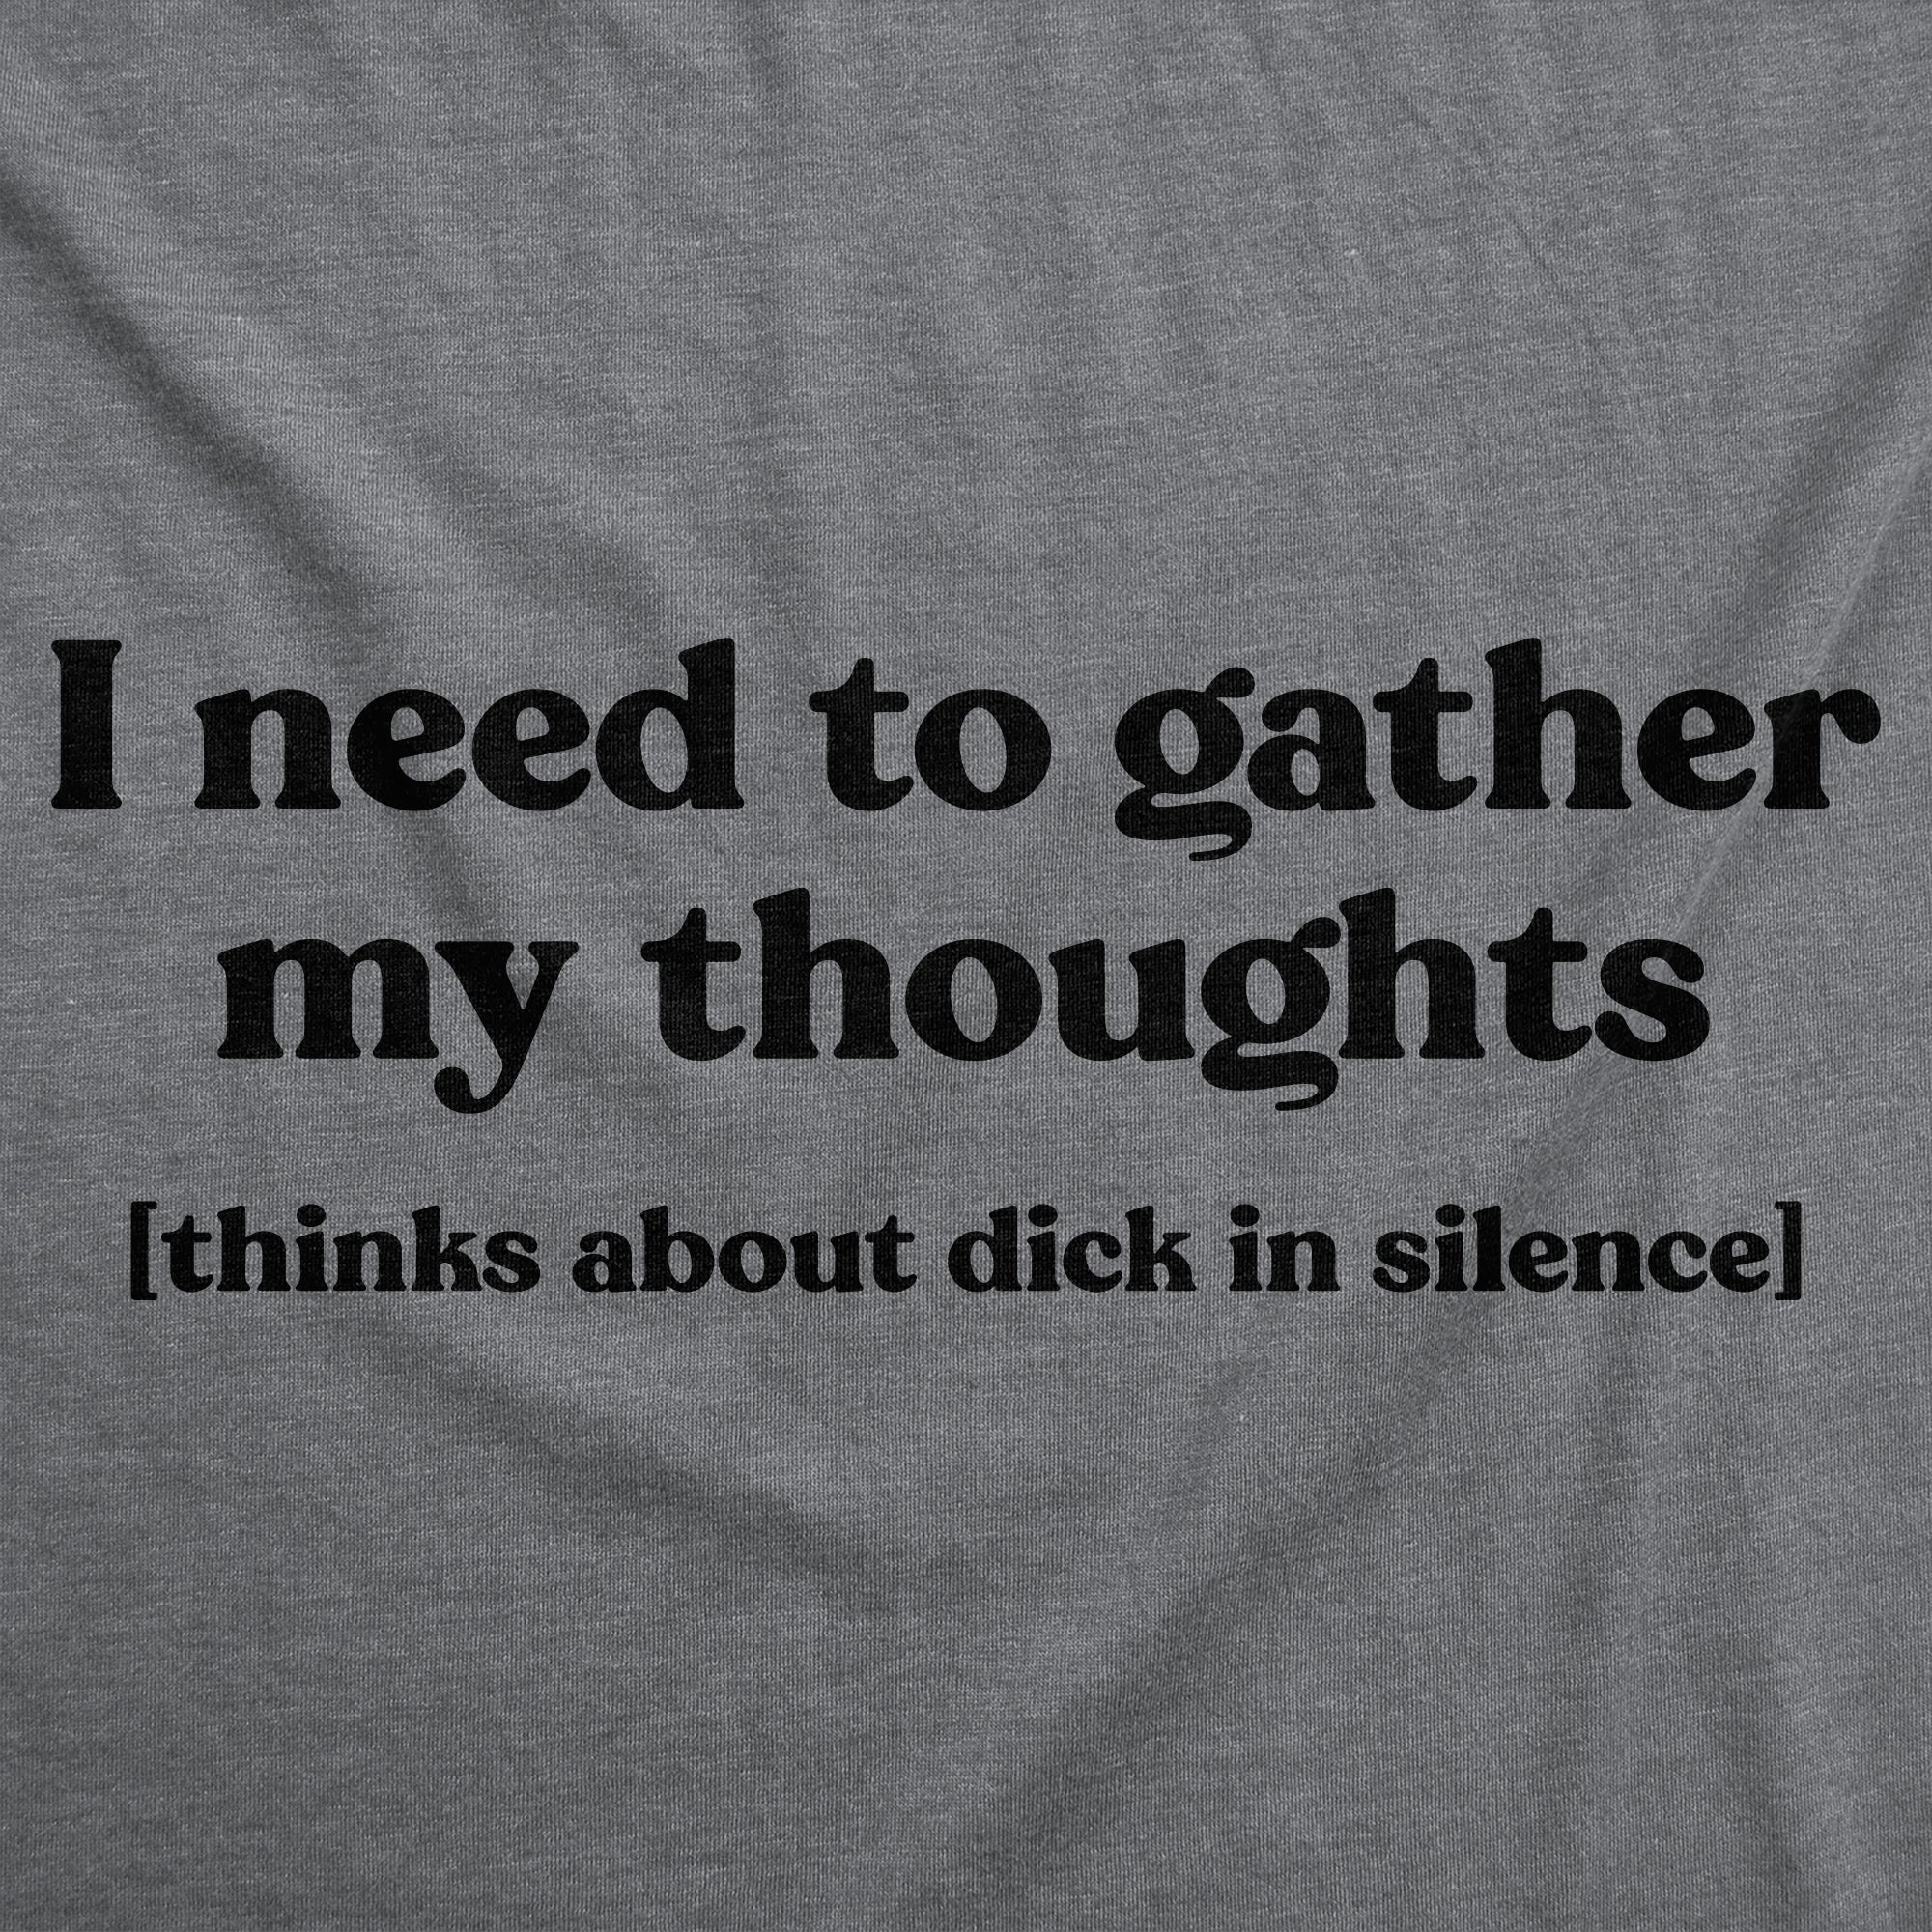 Funny Dark Heather Grey - Gather My Thoughts Dick I Need To Gather My Thoughts Dicks Mens T Shirt Nerdy sarcastic Tee